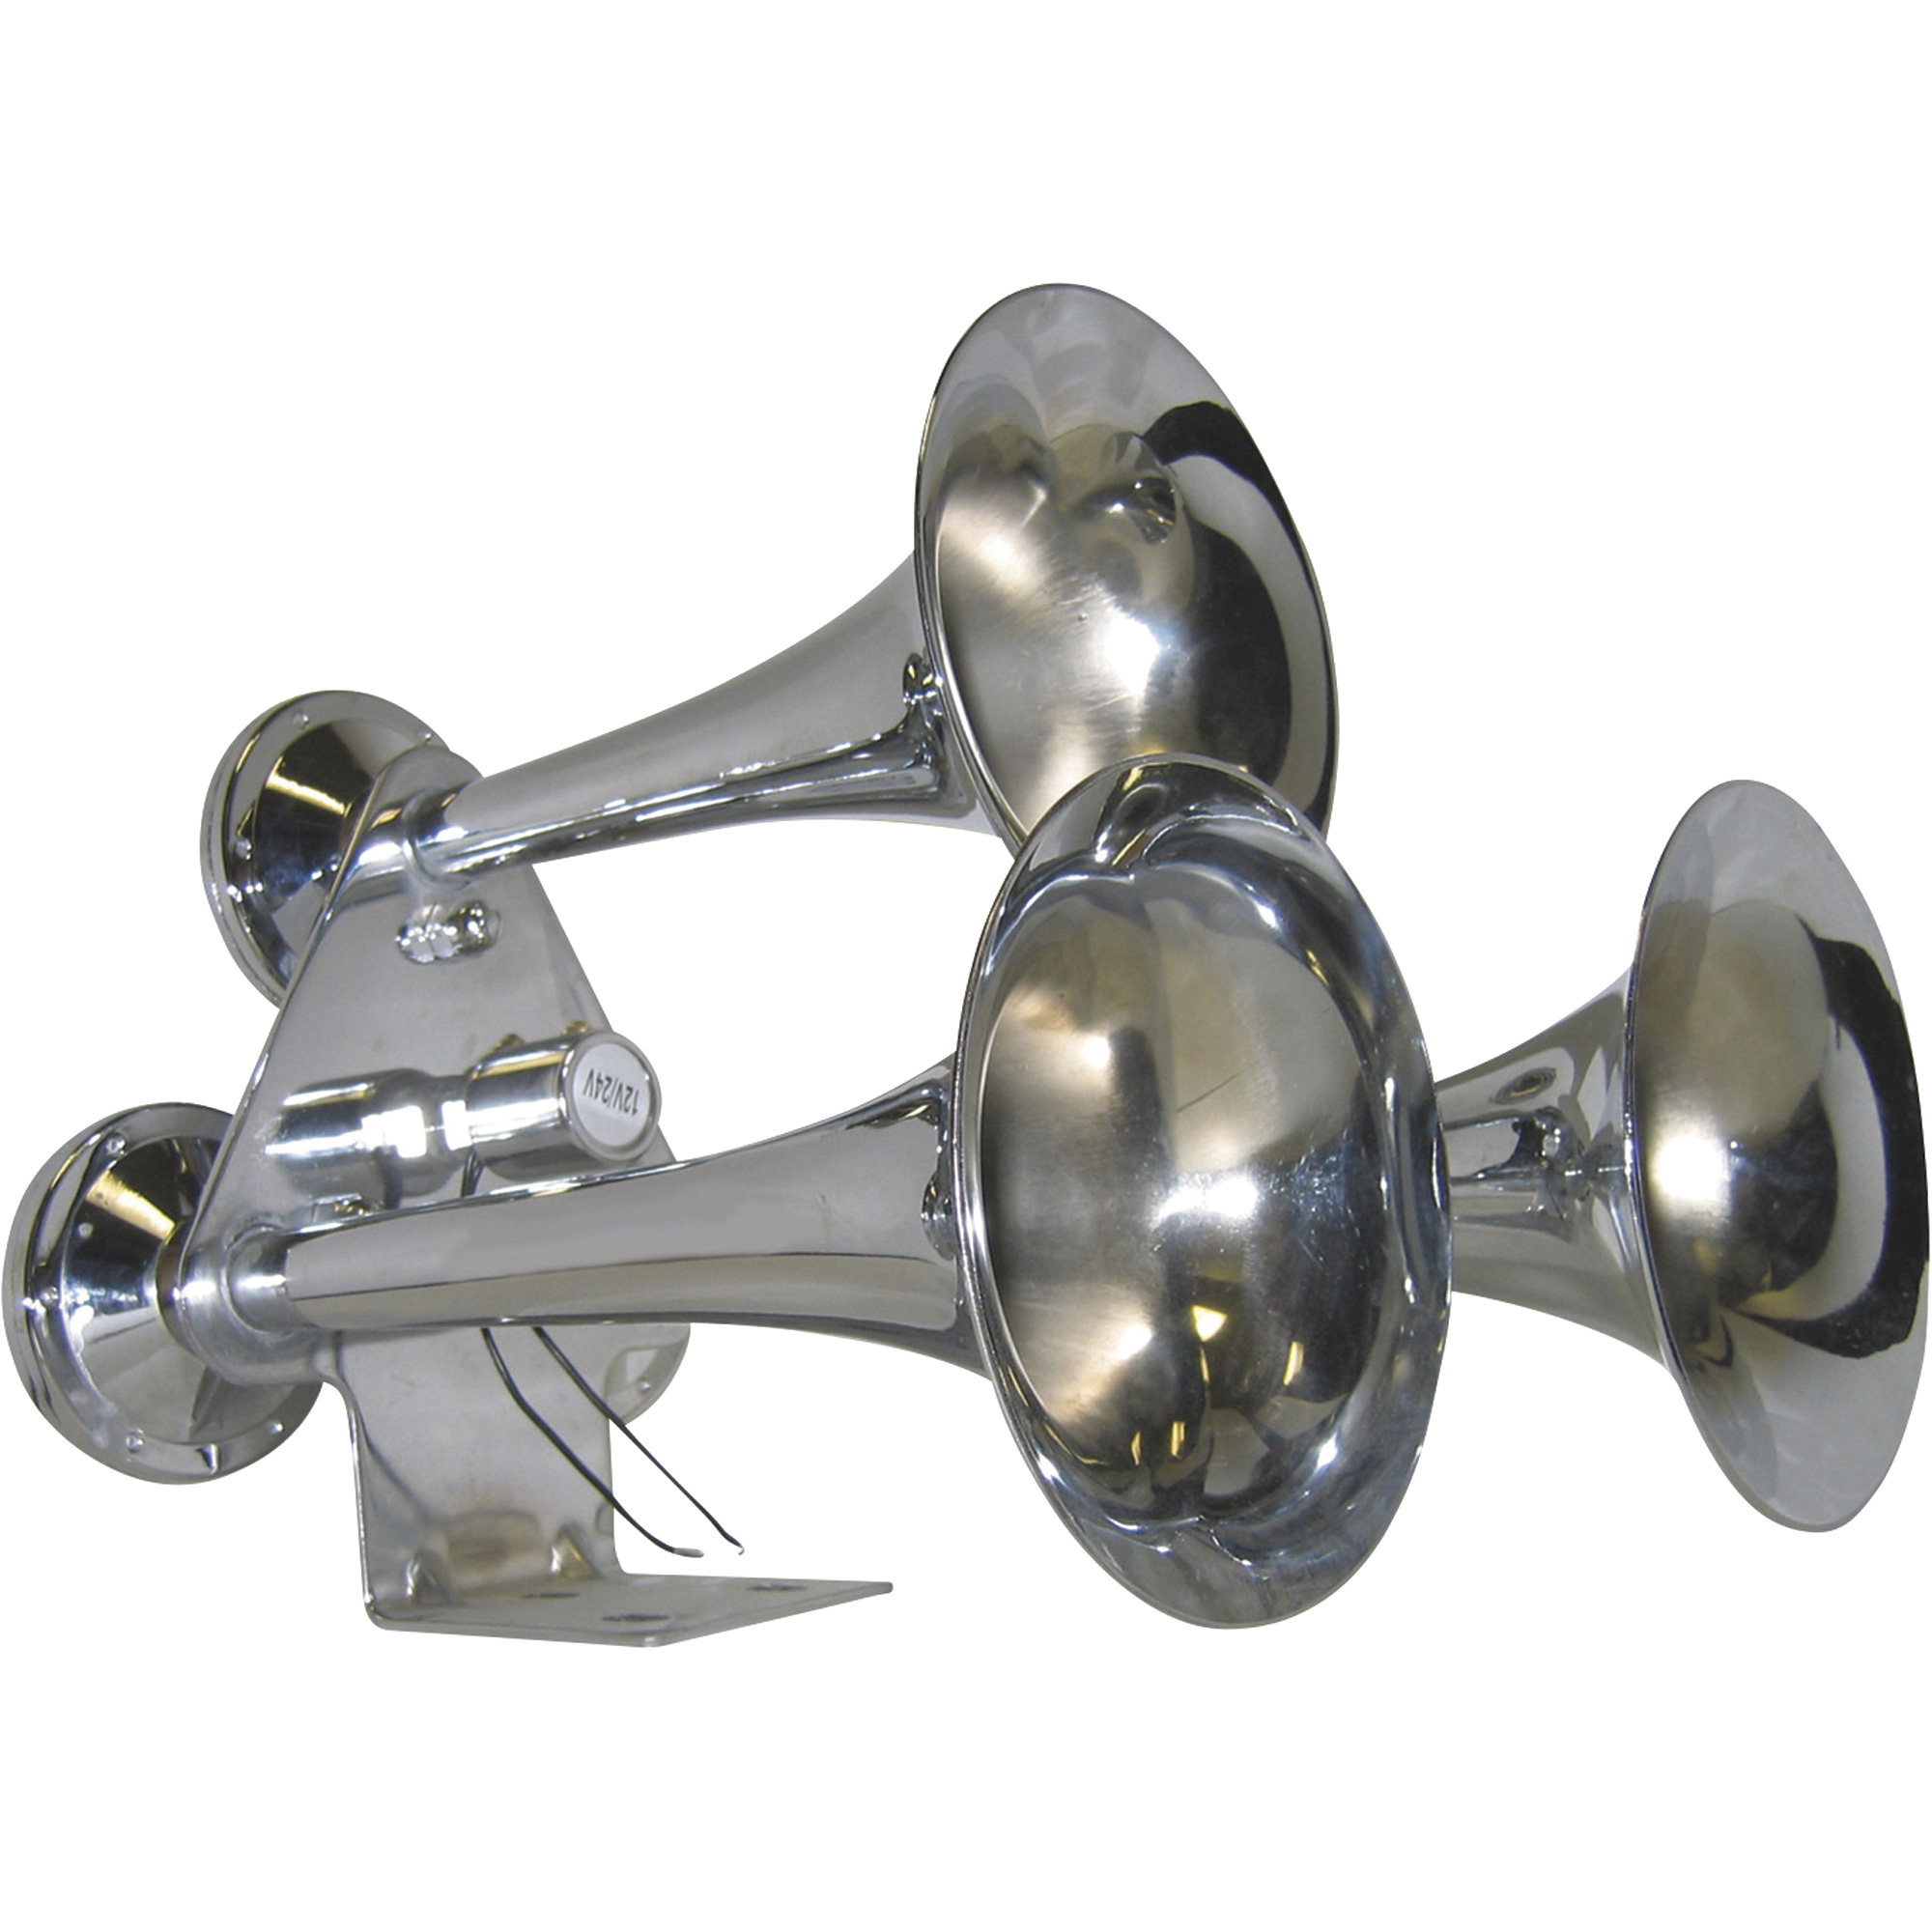 Trux Accessories 3-Bell Compact Train Air Horn for Trucks, Model# THORN-1